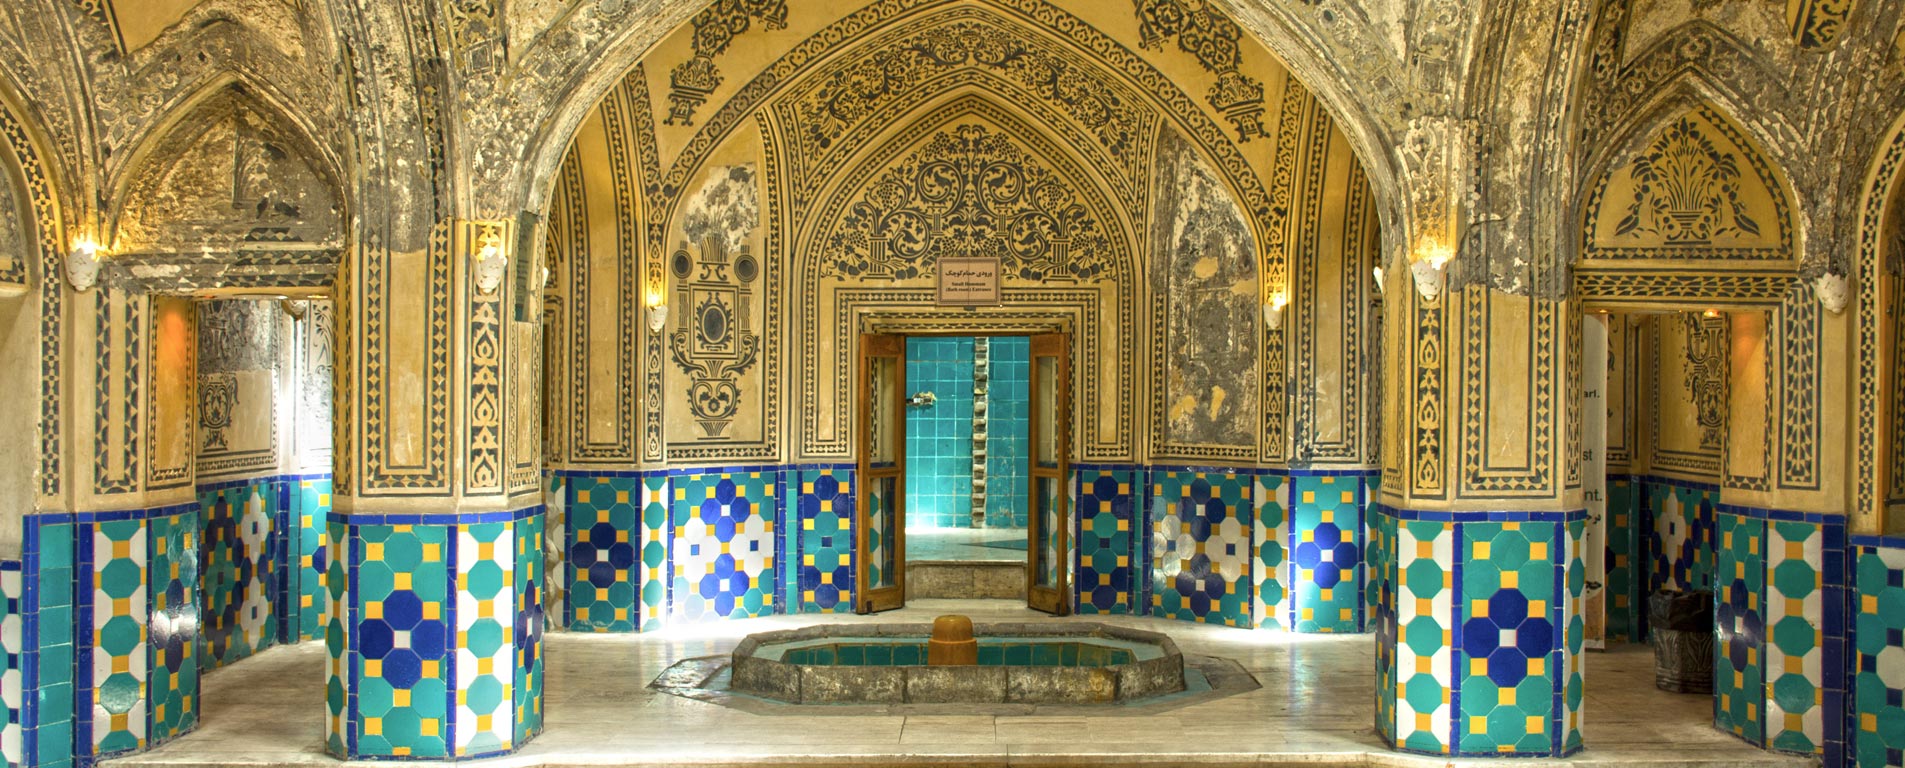 حمام سلطان امیر احمد کاشان